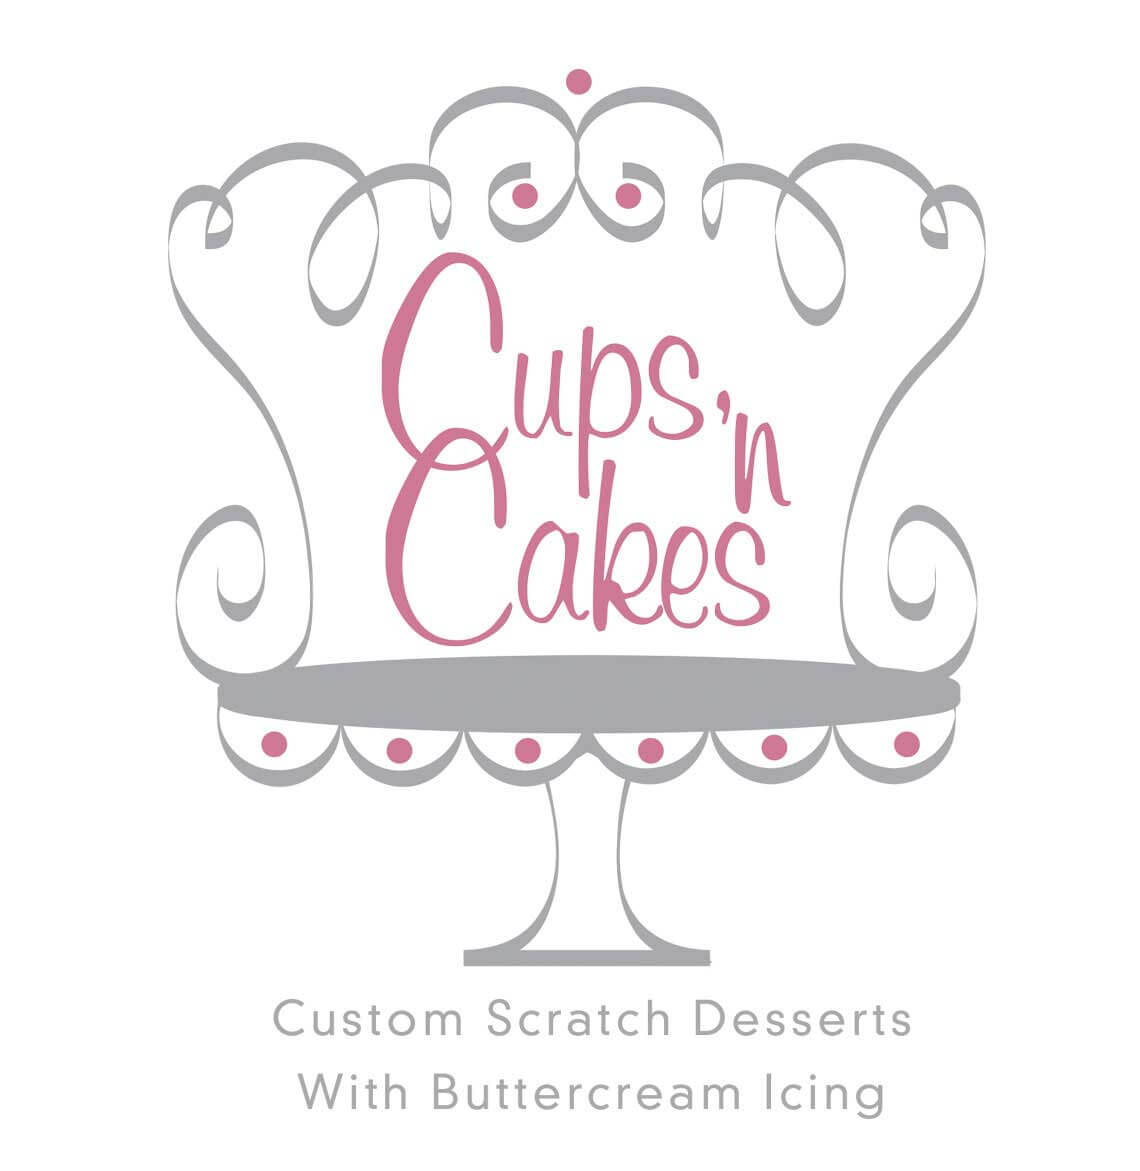 Cups n' Cakes Logo